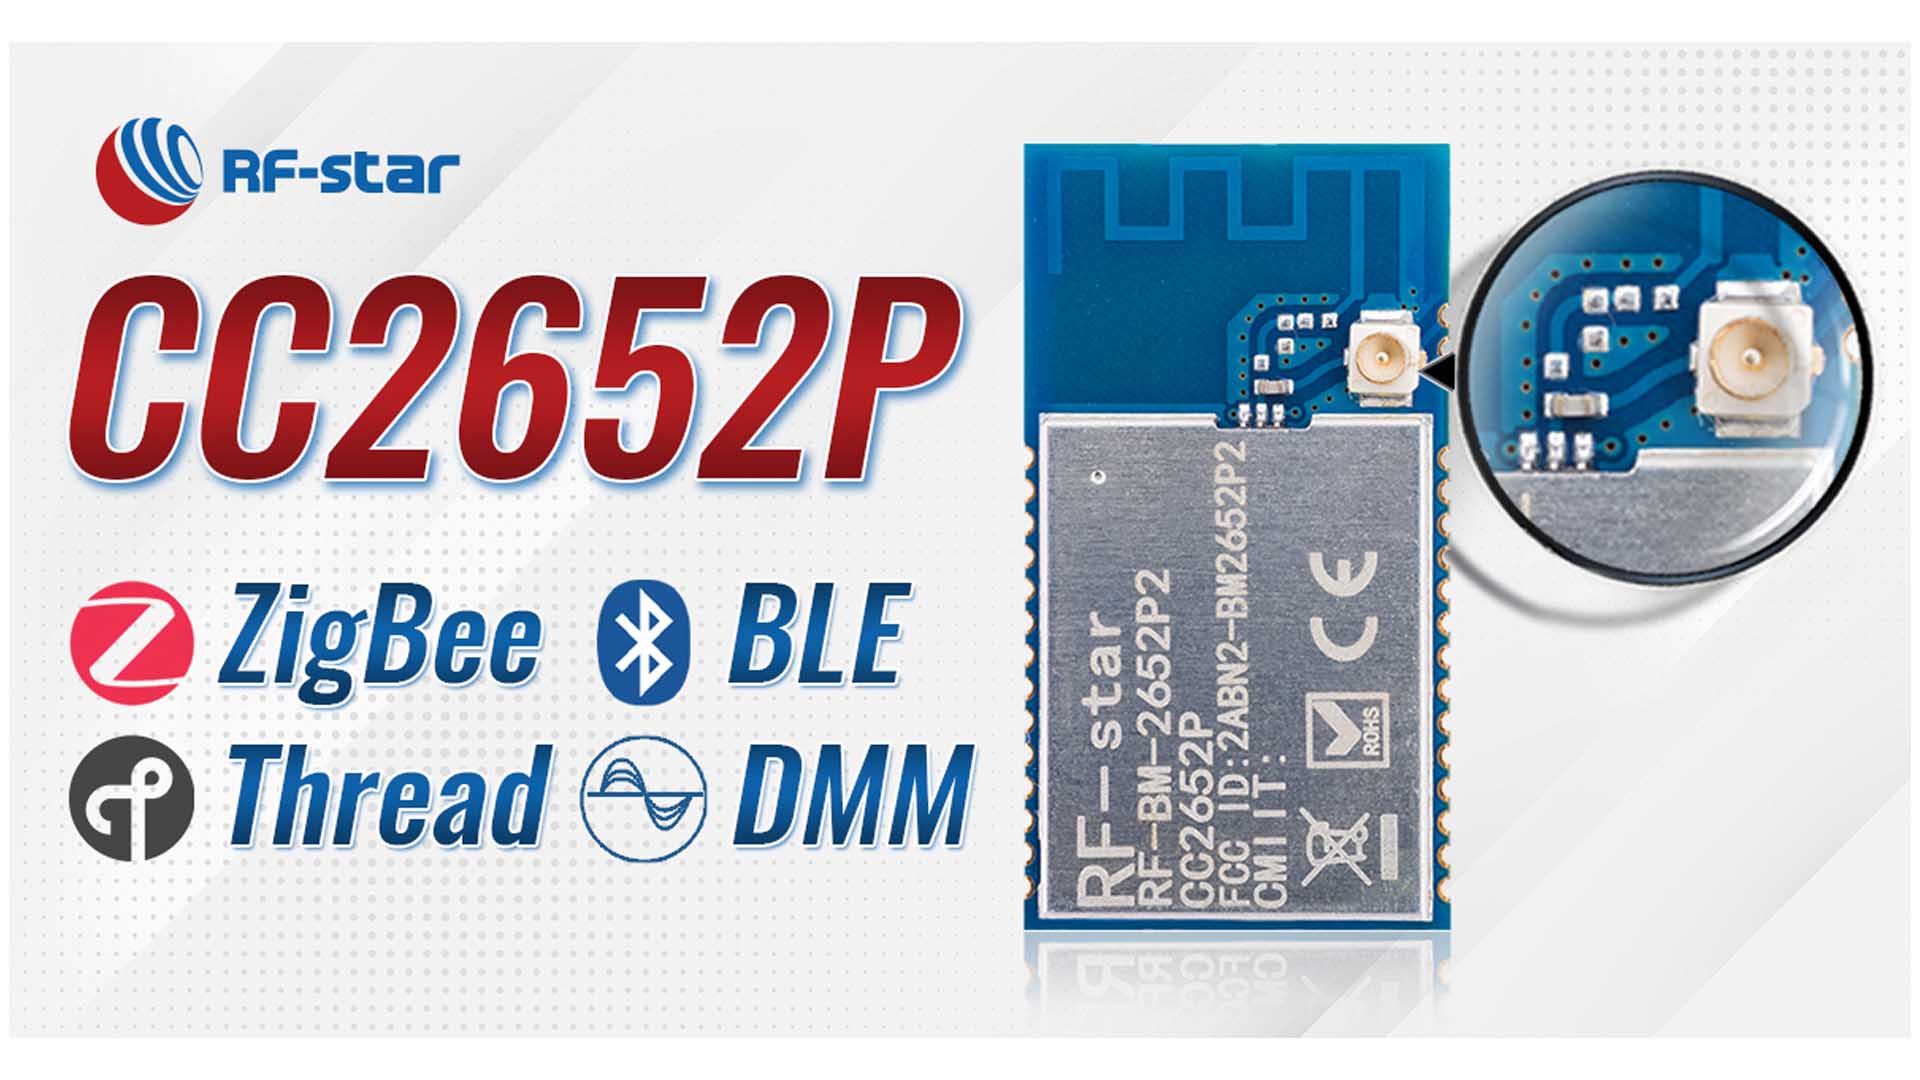 rfstar CC2652P Multiprotokoll 2.4 GHz HF-Zigbee-Modul BLE5.1 802.15.4 TI CC2652P für Smart Home